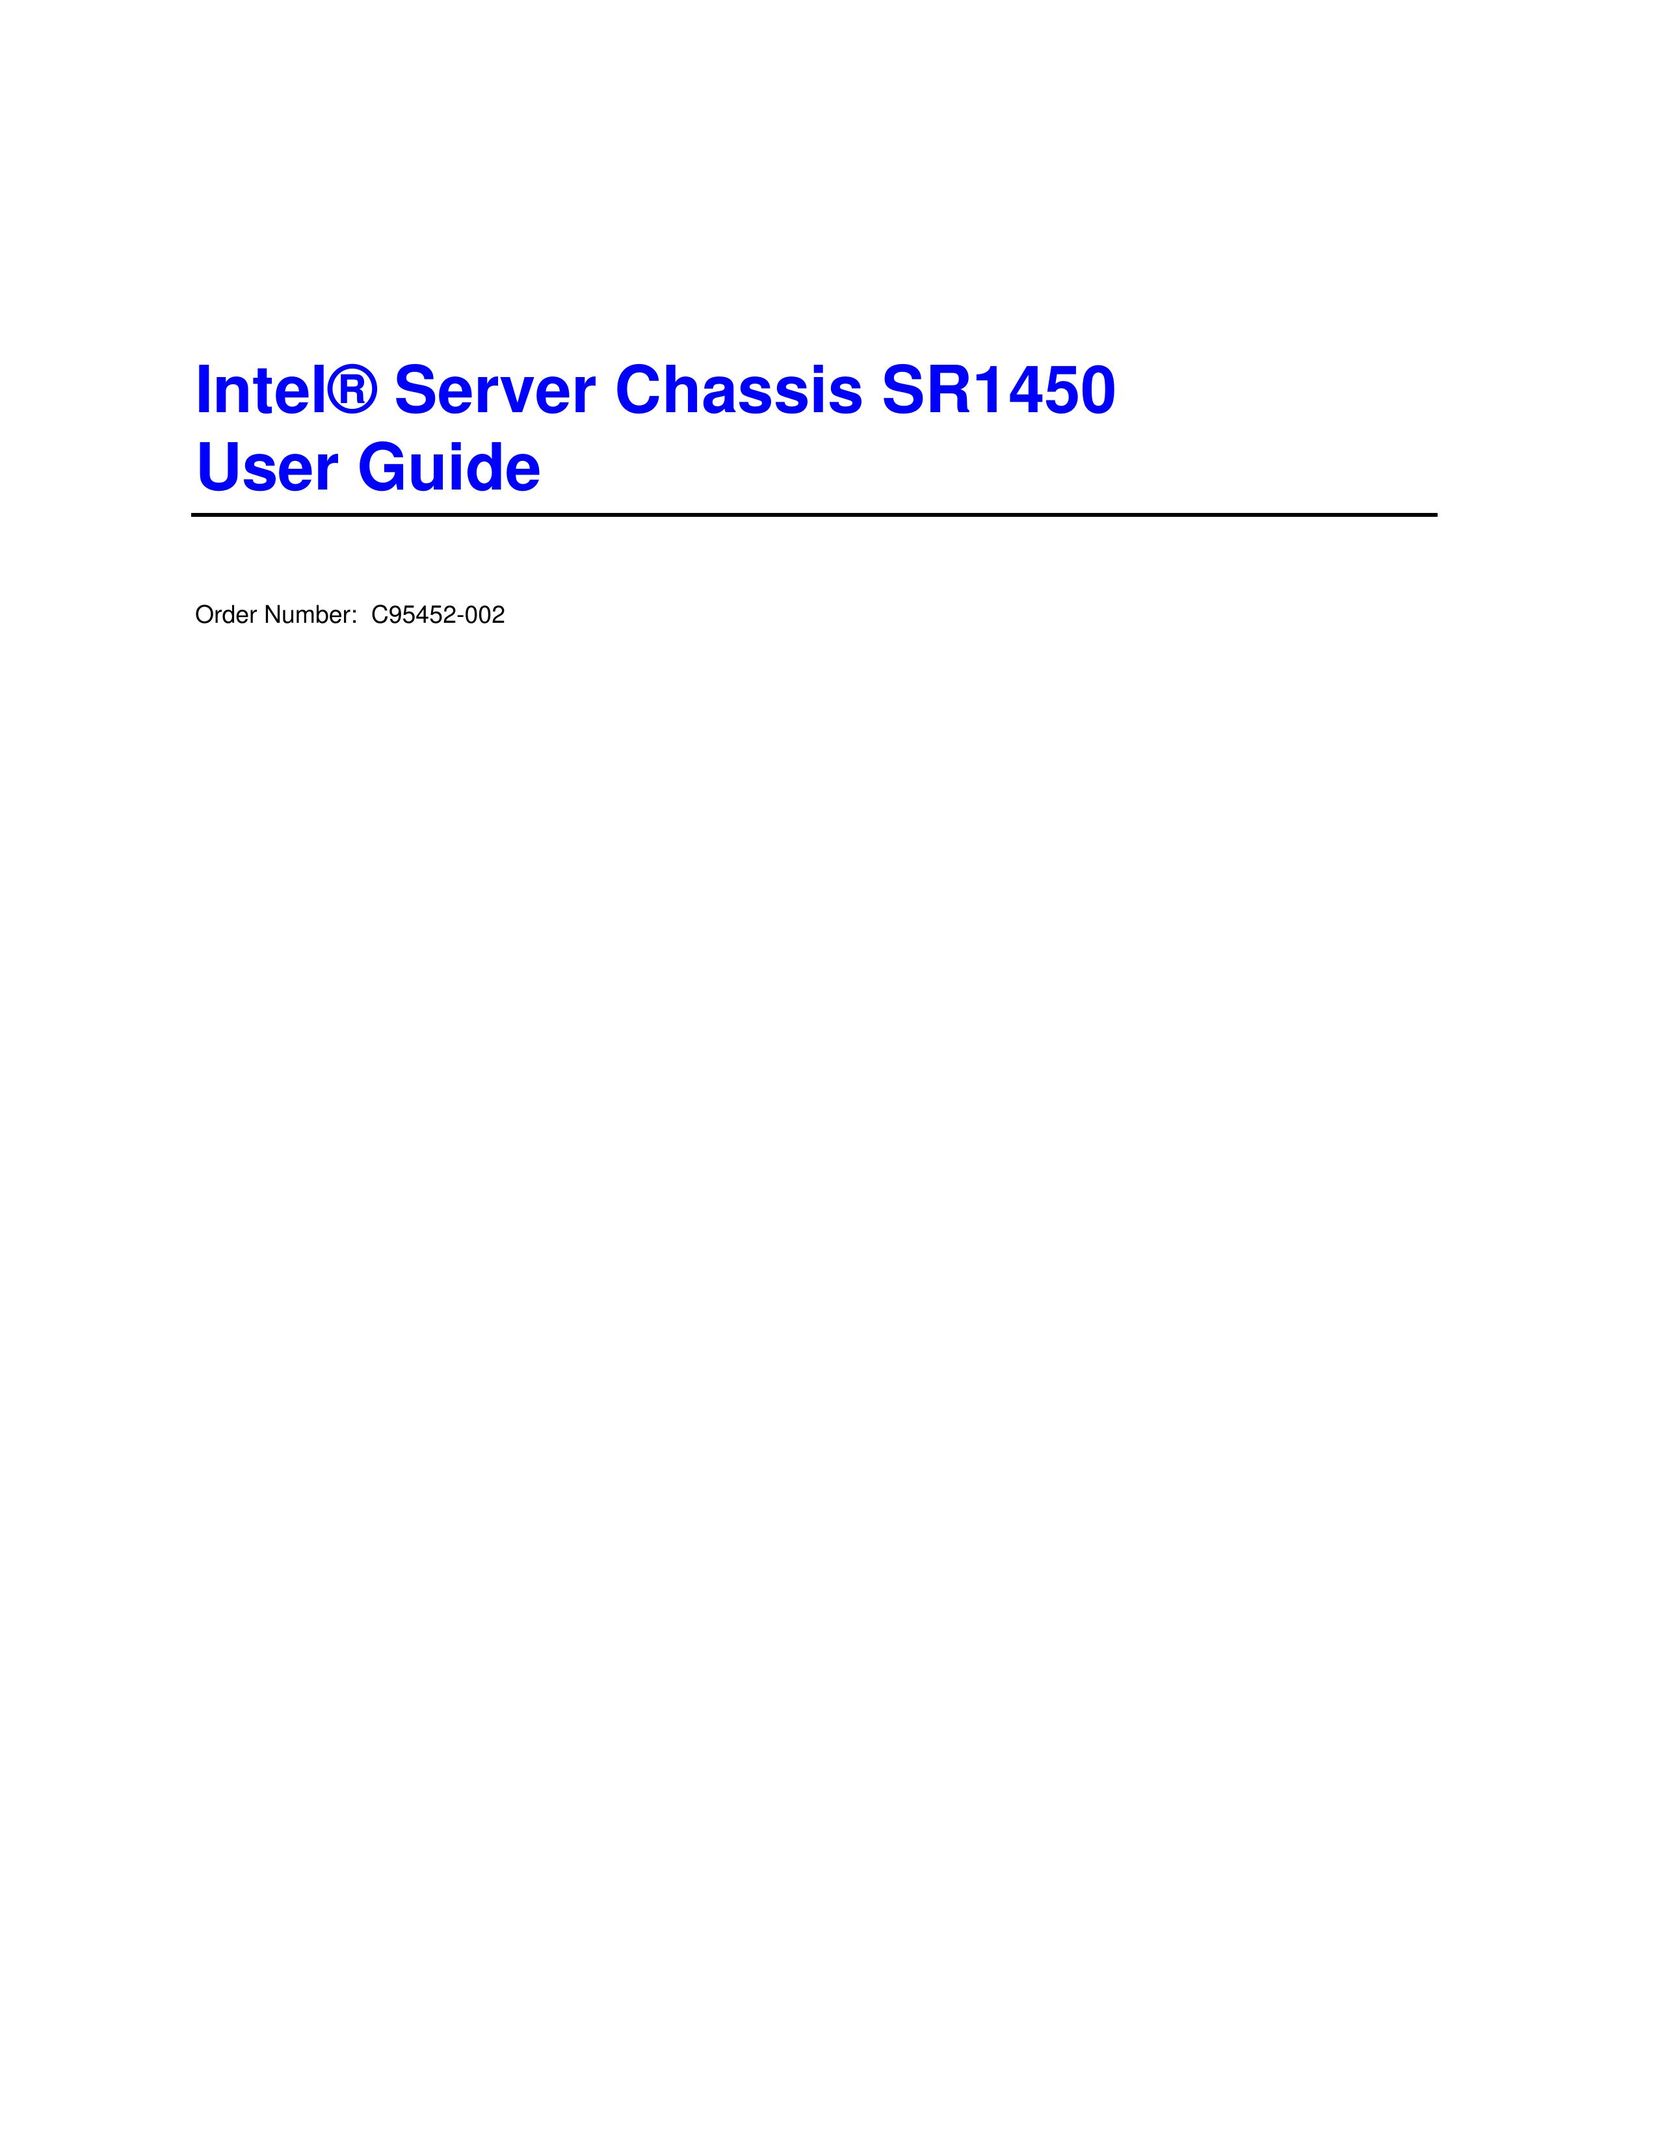 Intel SR1450 Computer Accessories User Manual